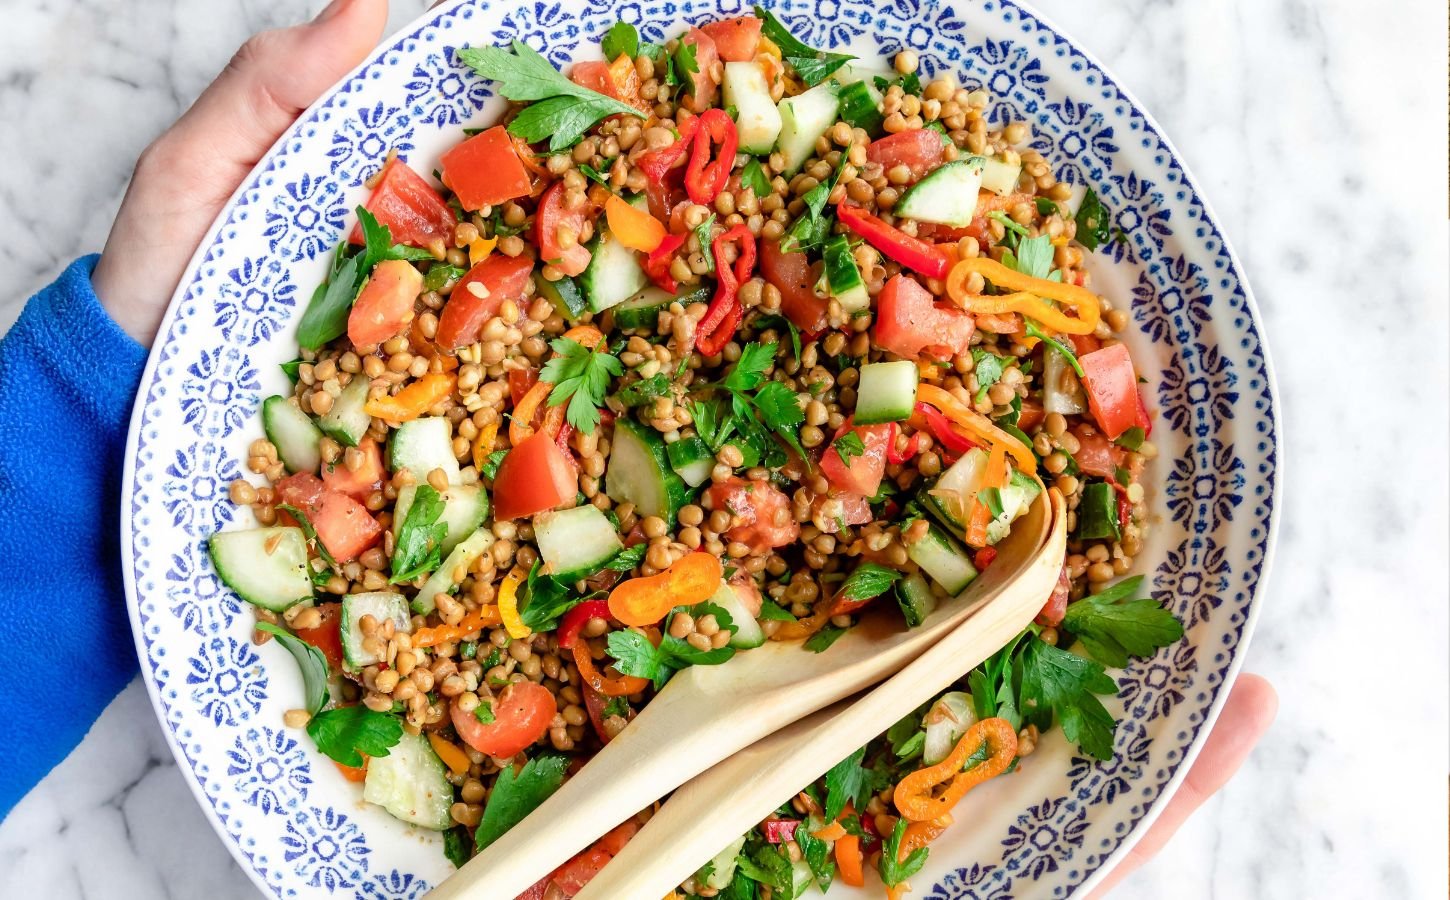 A vegan lentil salad